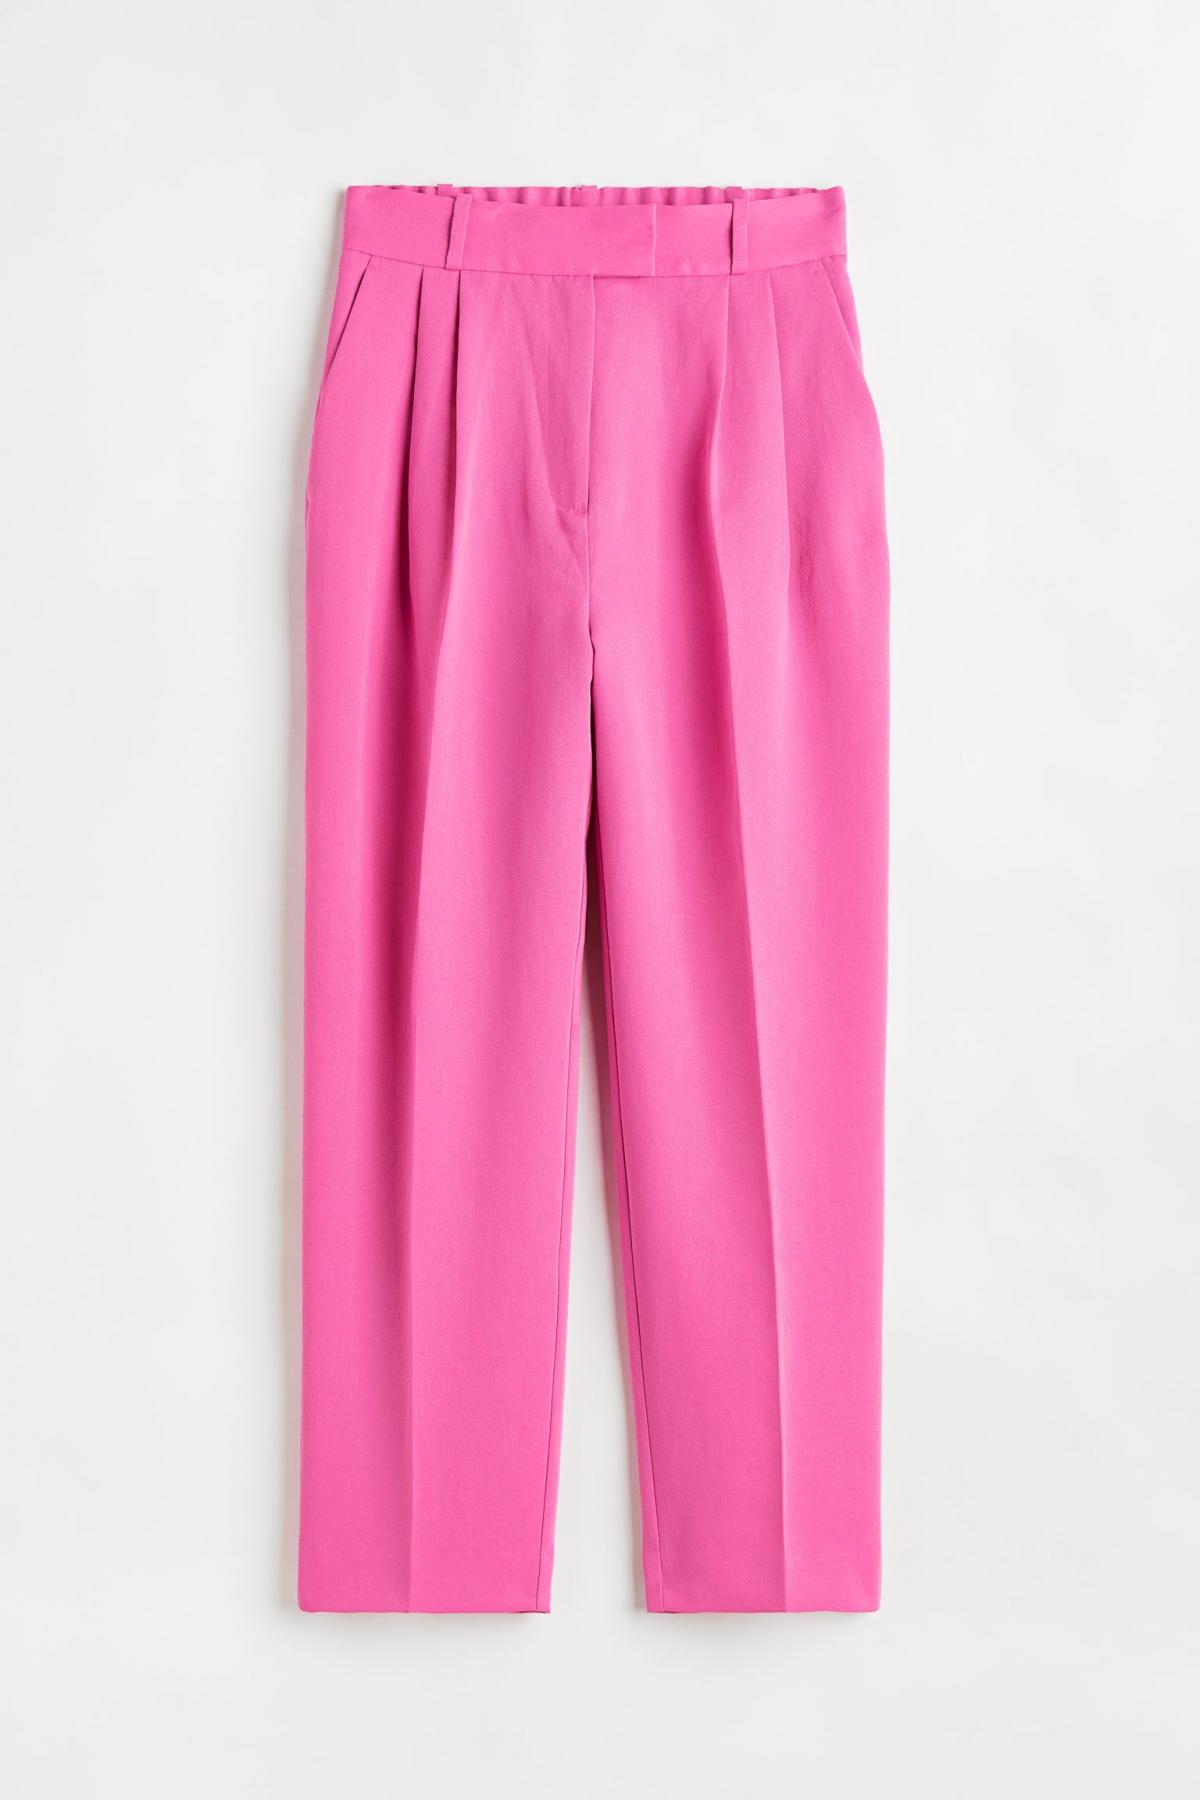 Pantalon à pinces rose bonbon